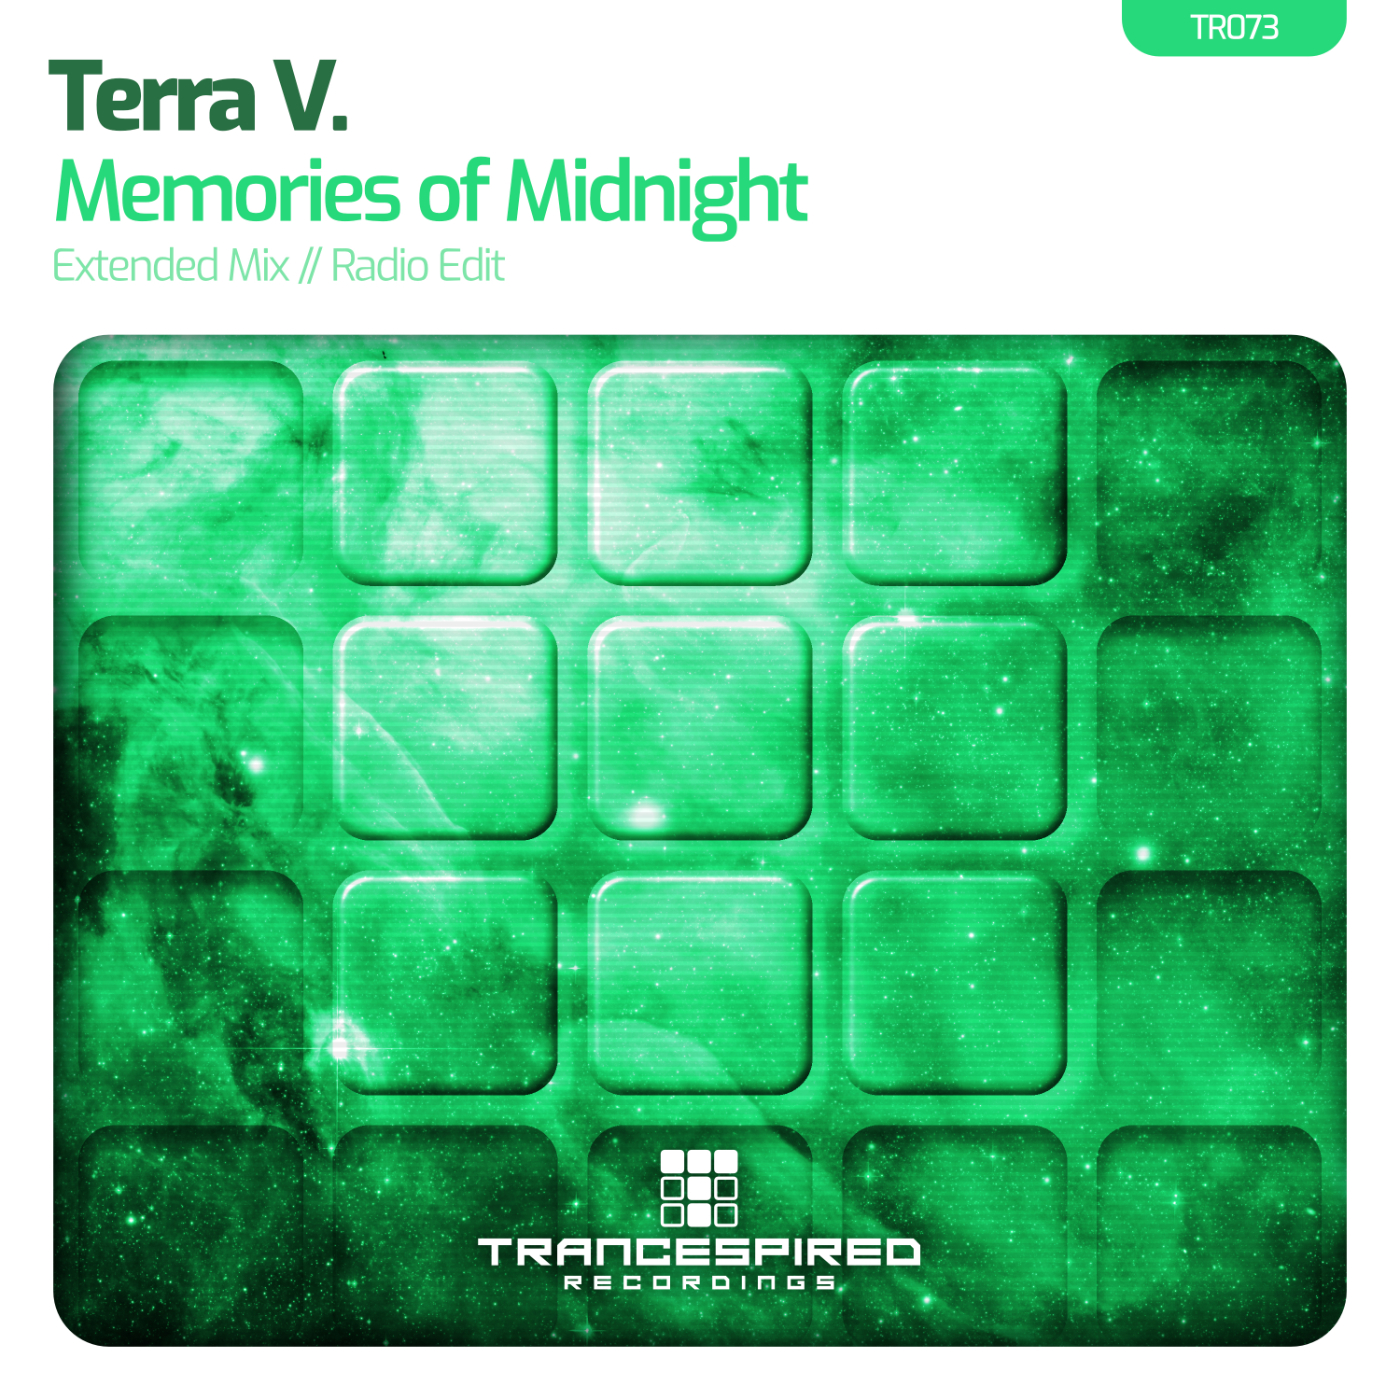 Terra V. presents Memories of Midnight on Trancespired Recordings